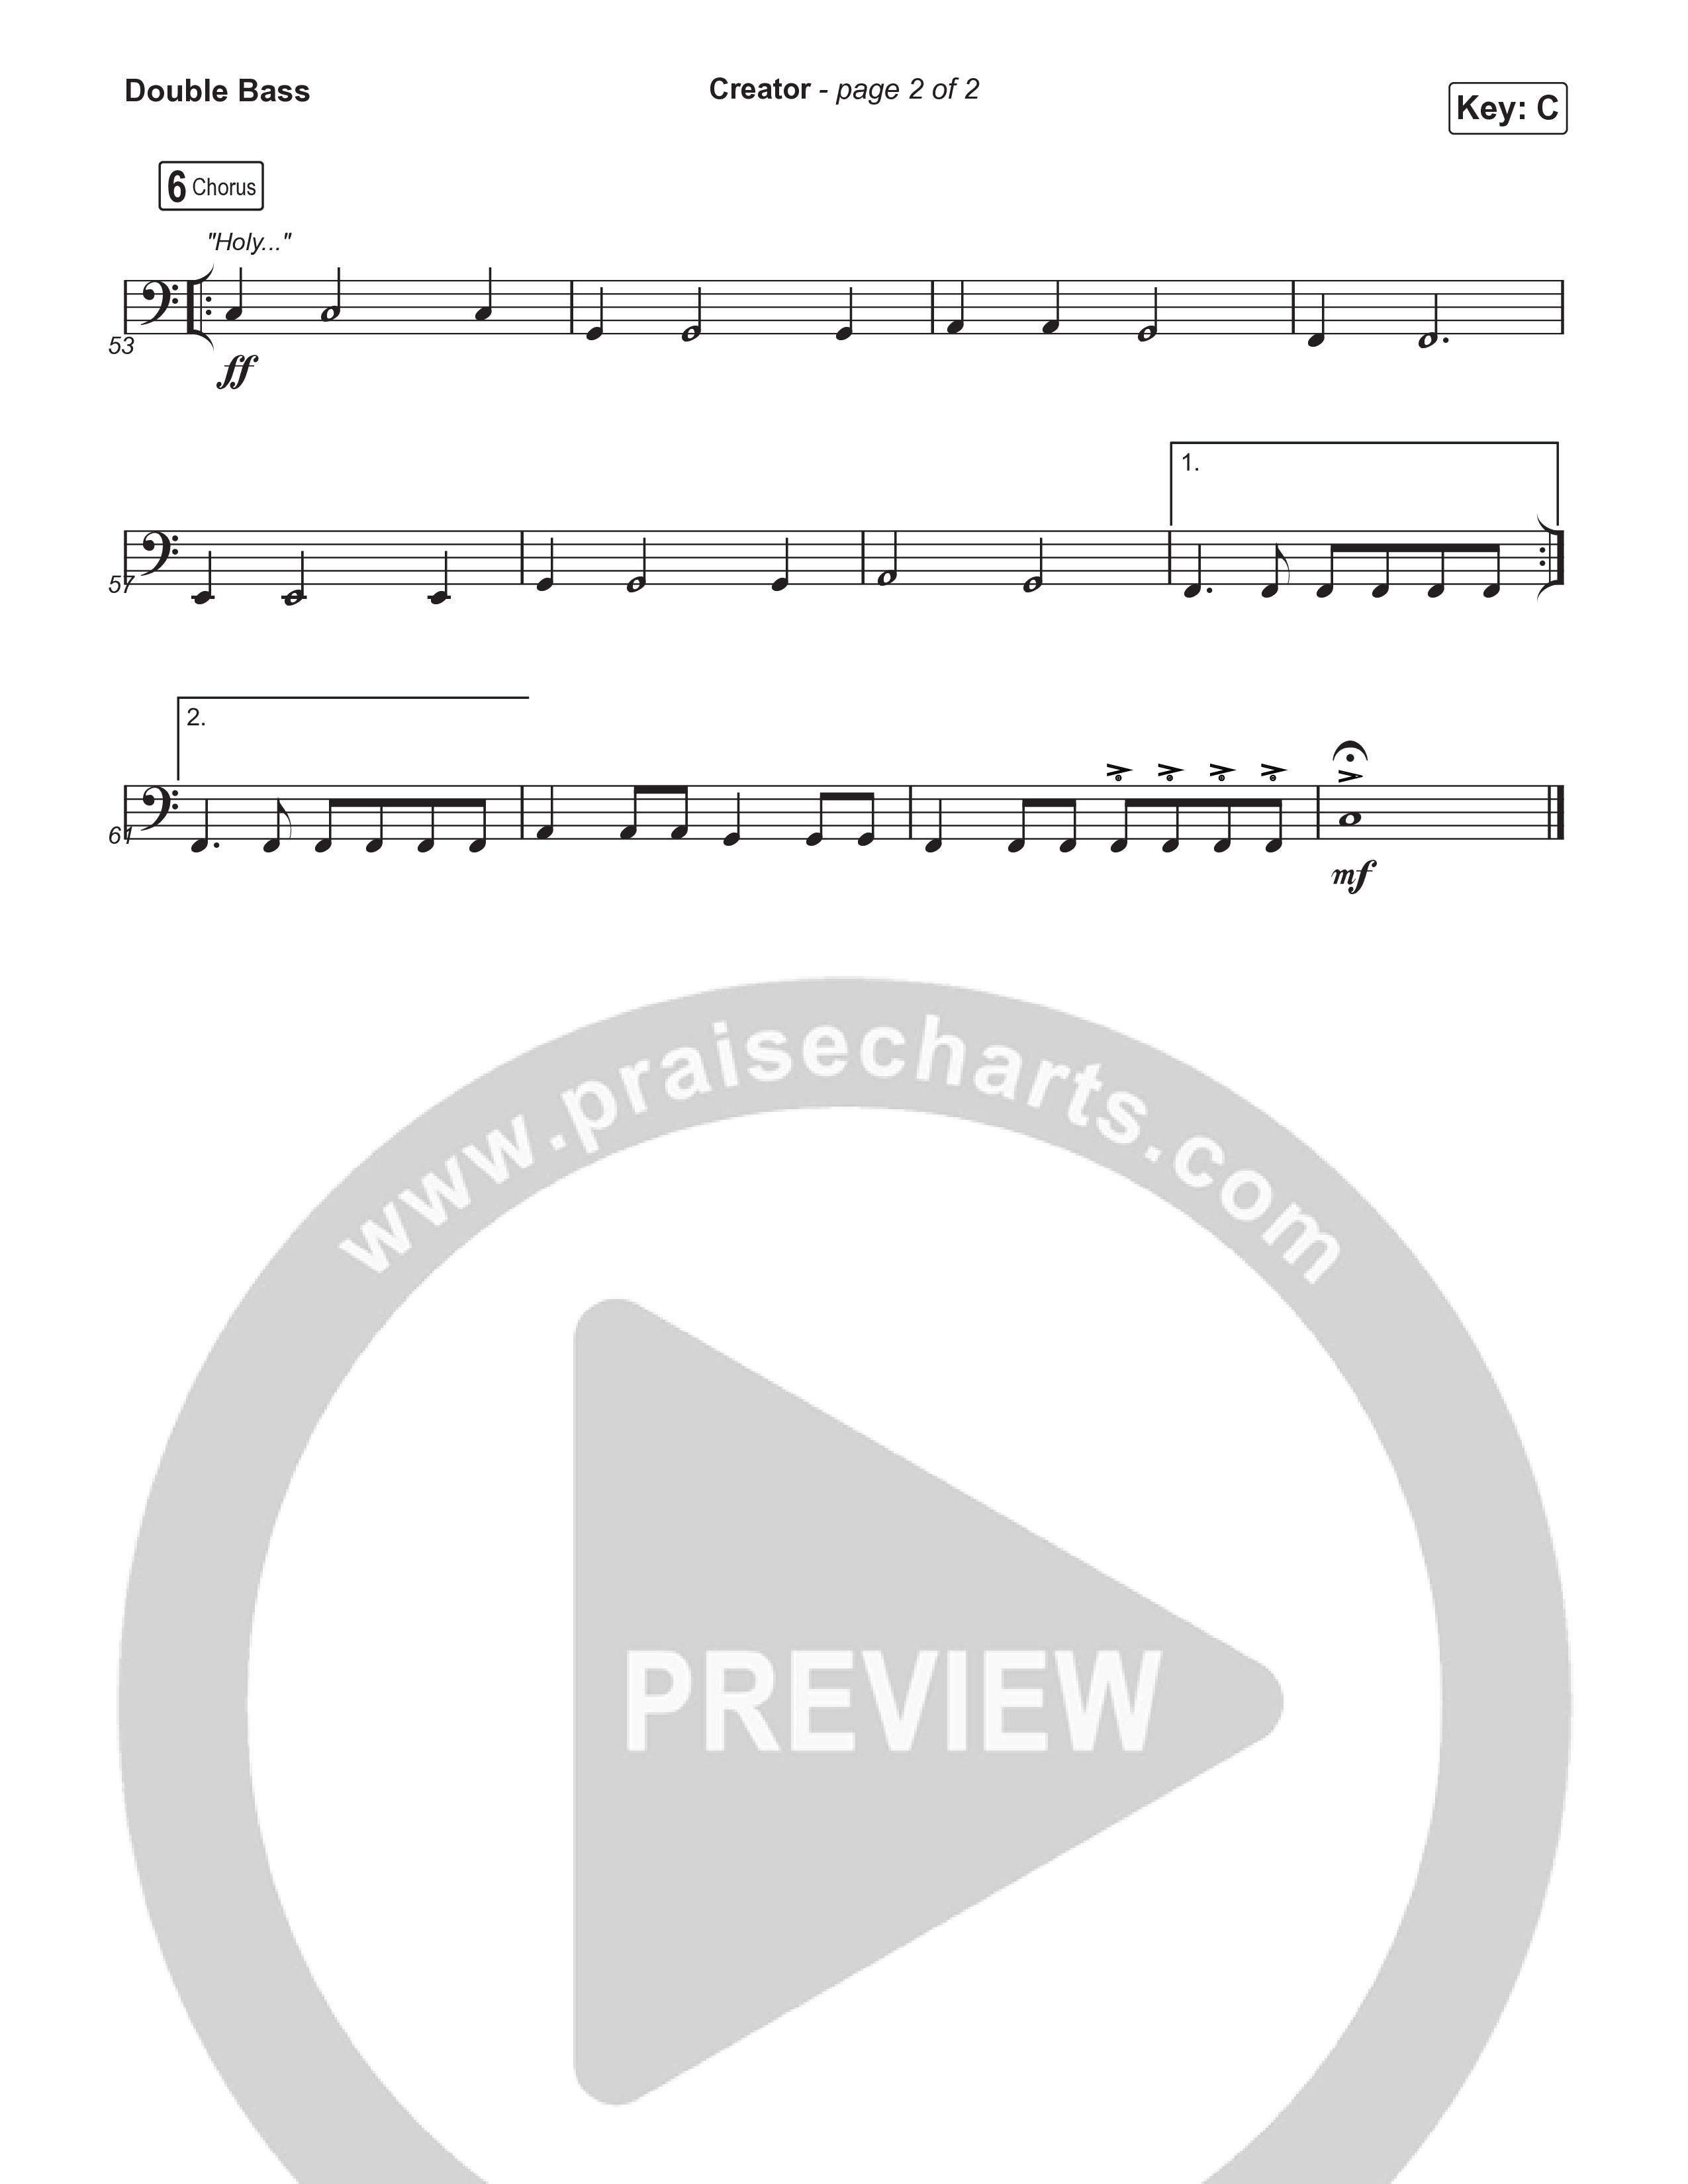 Creator (Worship Choir/SAB) Double Bass (Phil Wickham)